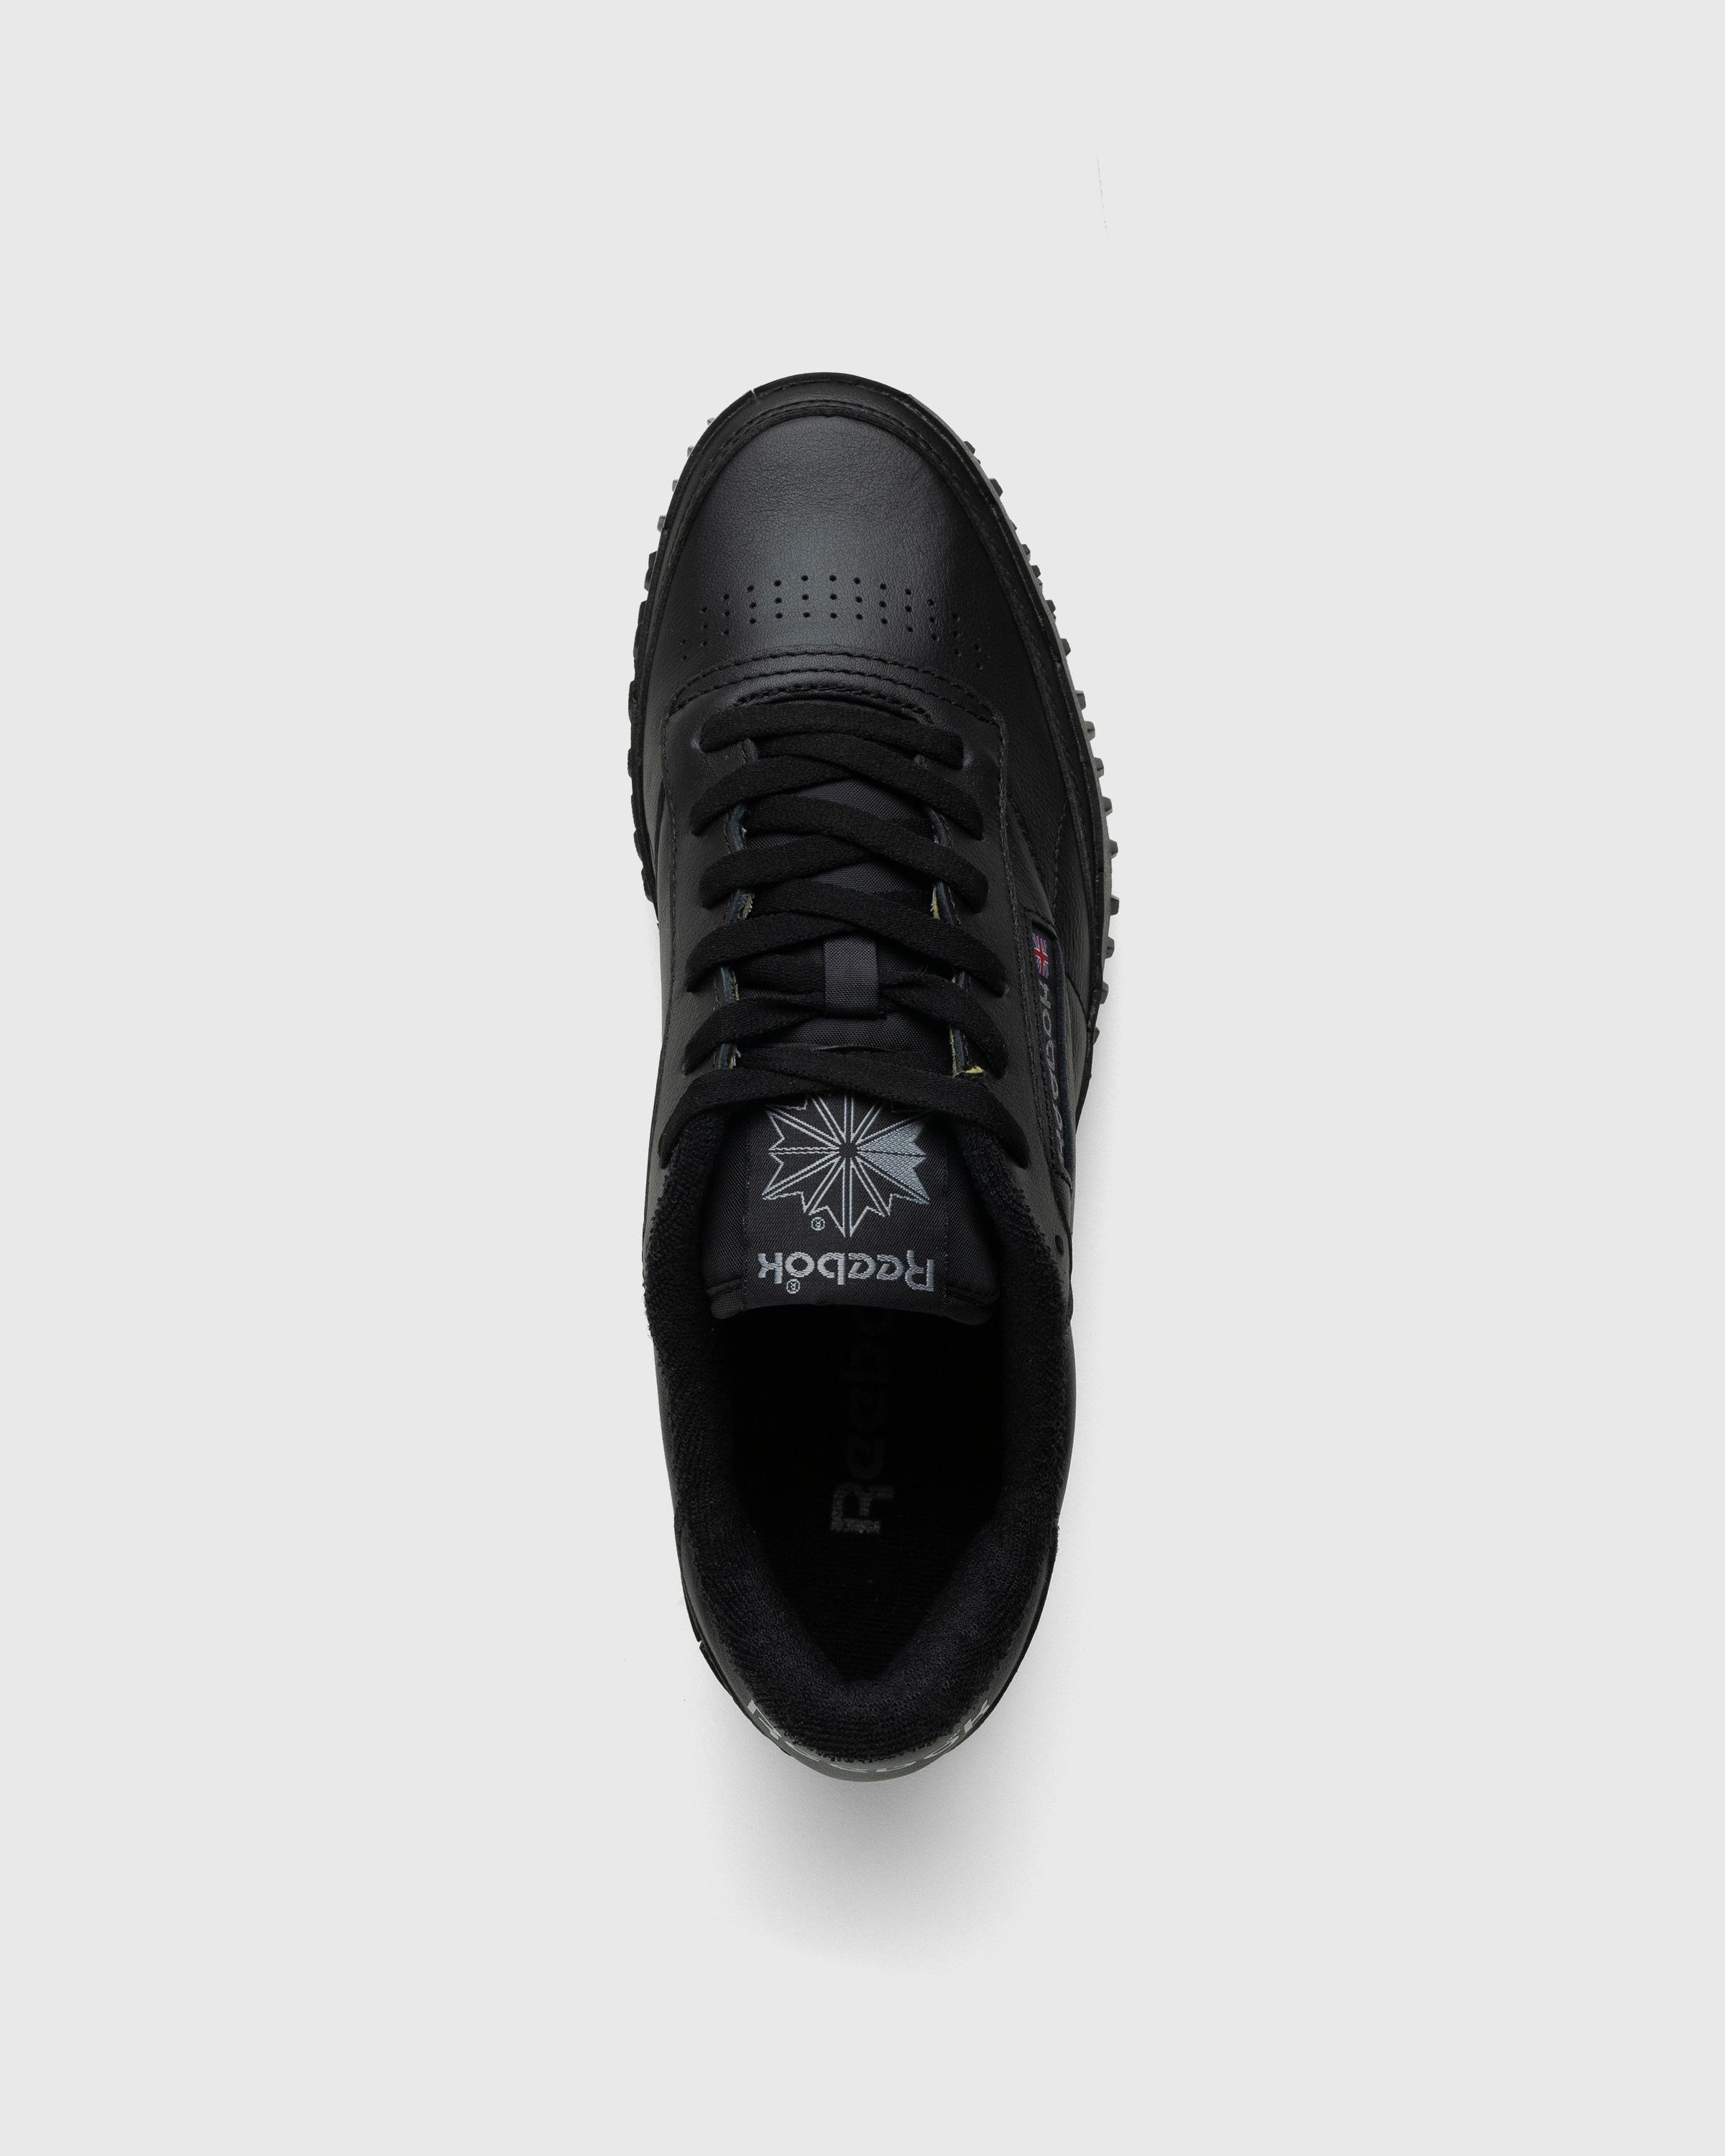 Reebok – Club C Vibram Black - Sneakers - Black - Image 5